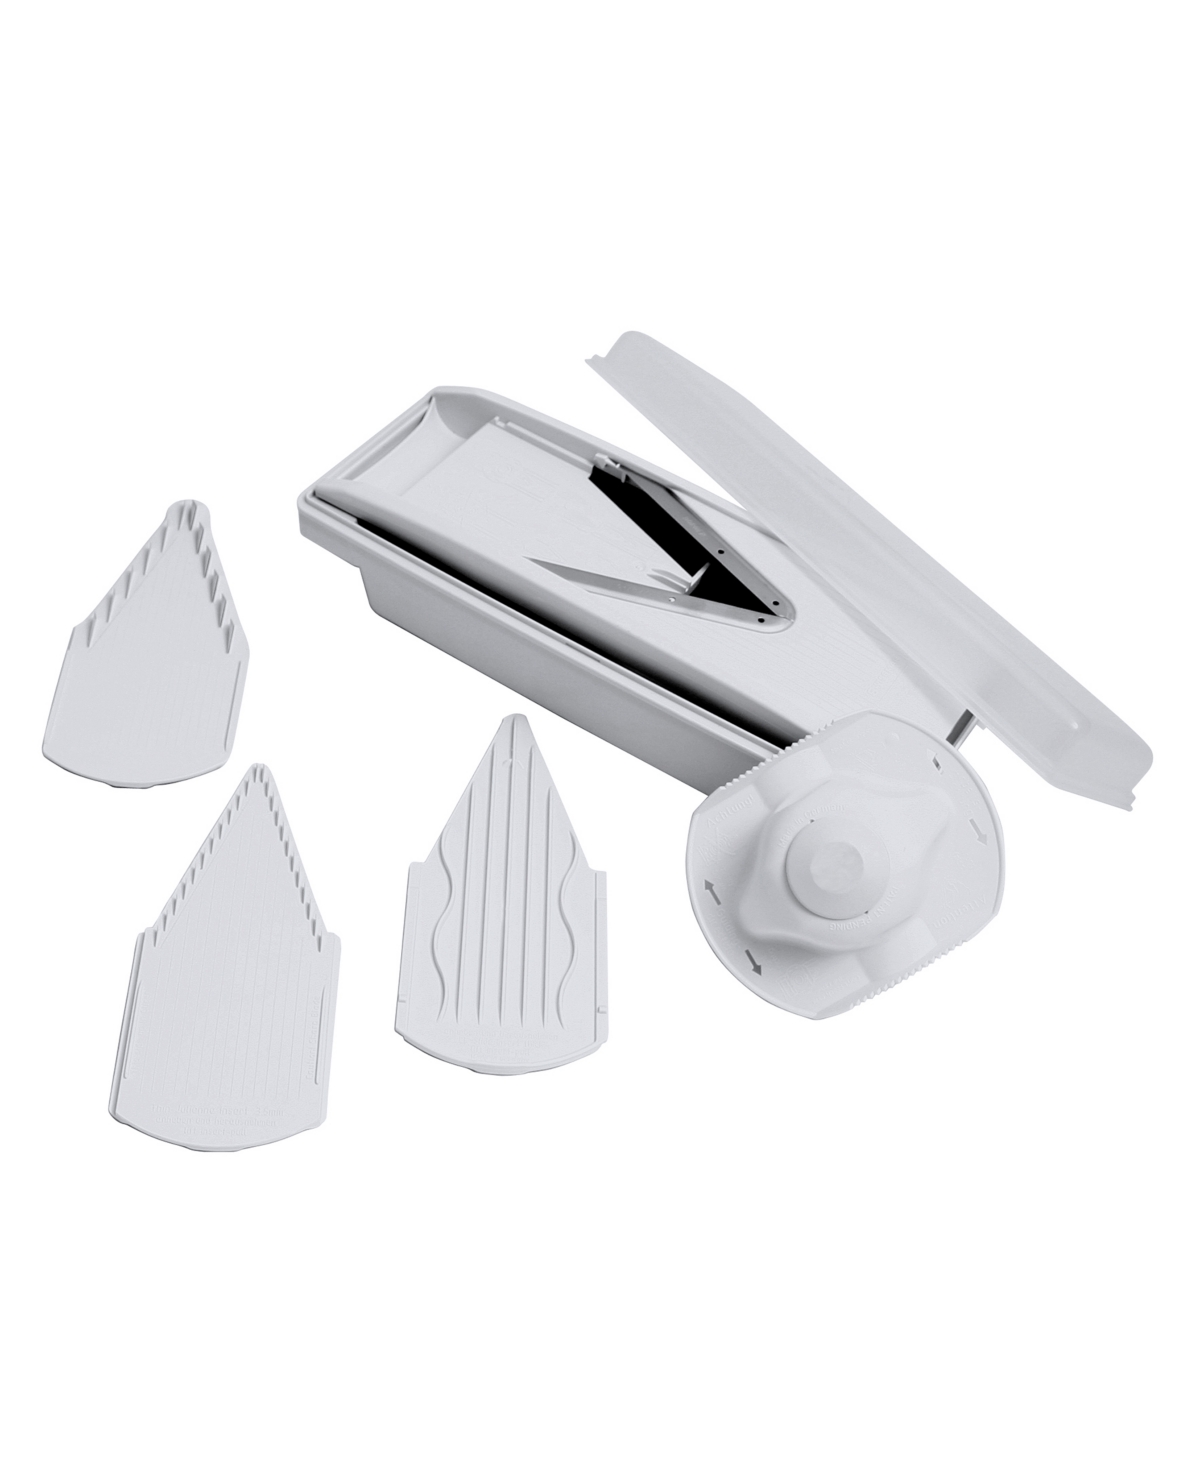 Swissmar V-prep Mandoline Slicer With German Surgical Grade Stainless Steel 7 Piece Blades Set In White